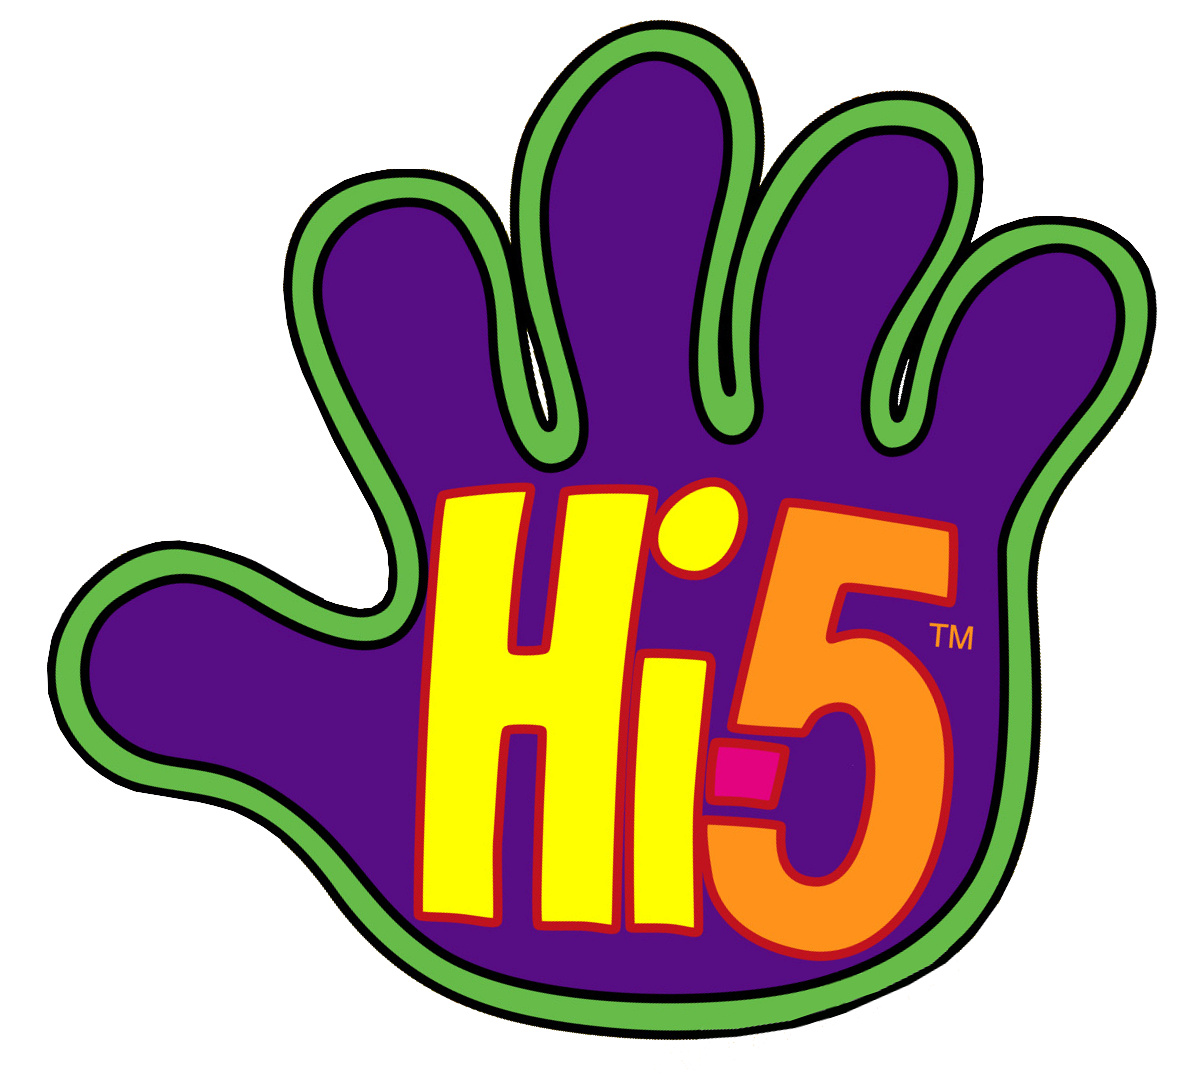 Image - Hi-5 Logo 1999-2005.png | Logopedia | FANDOM powered by Wikia